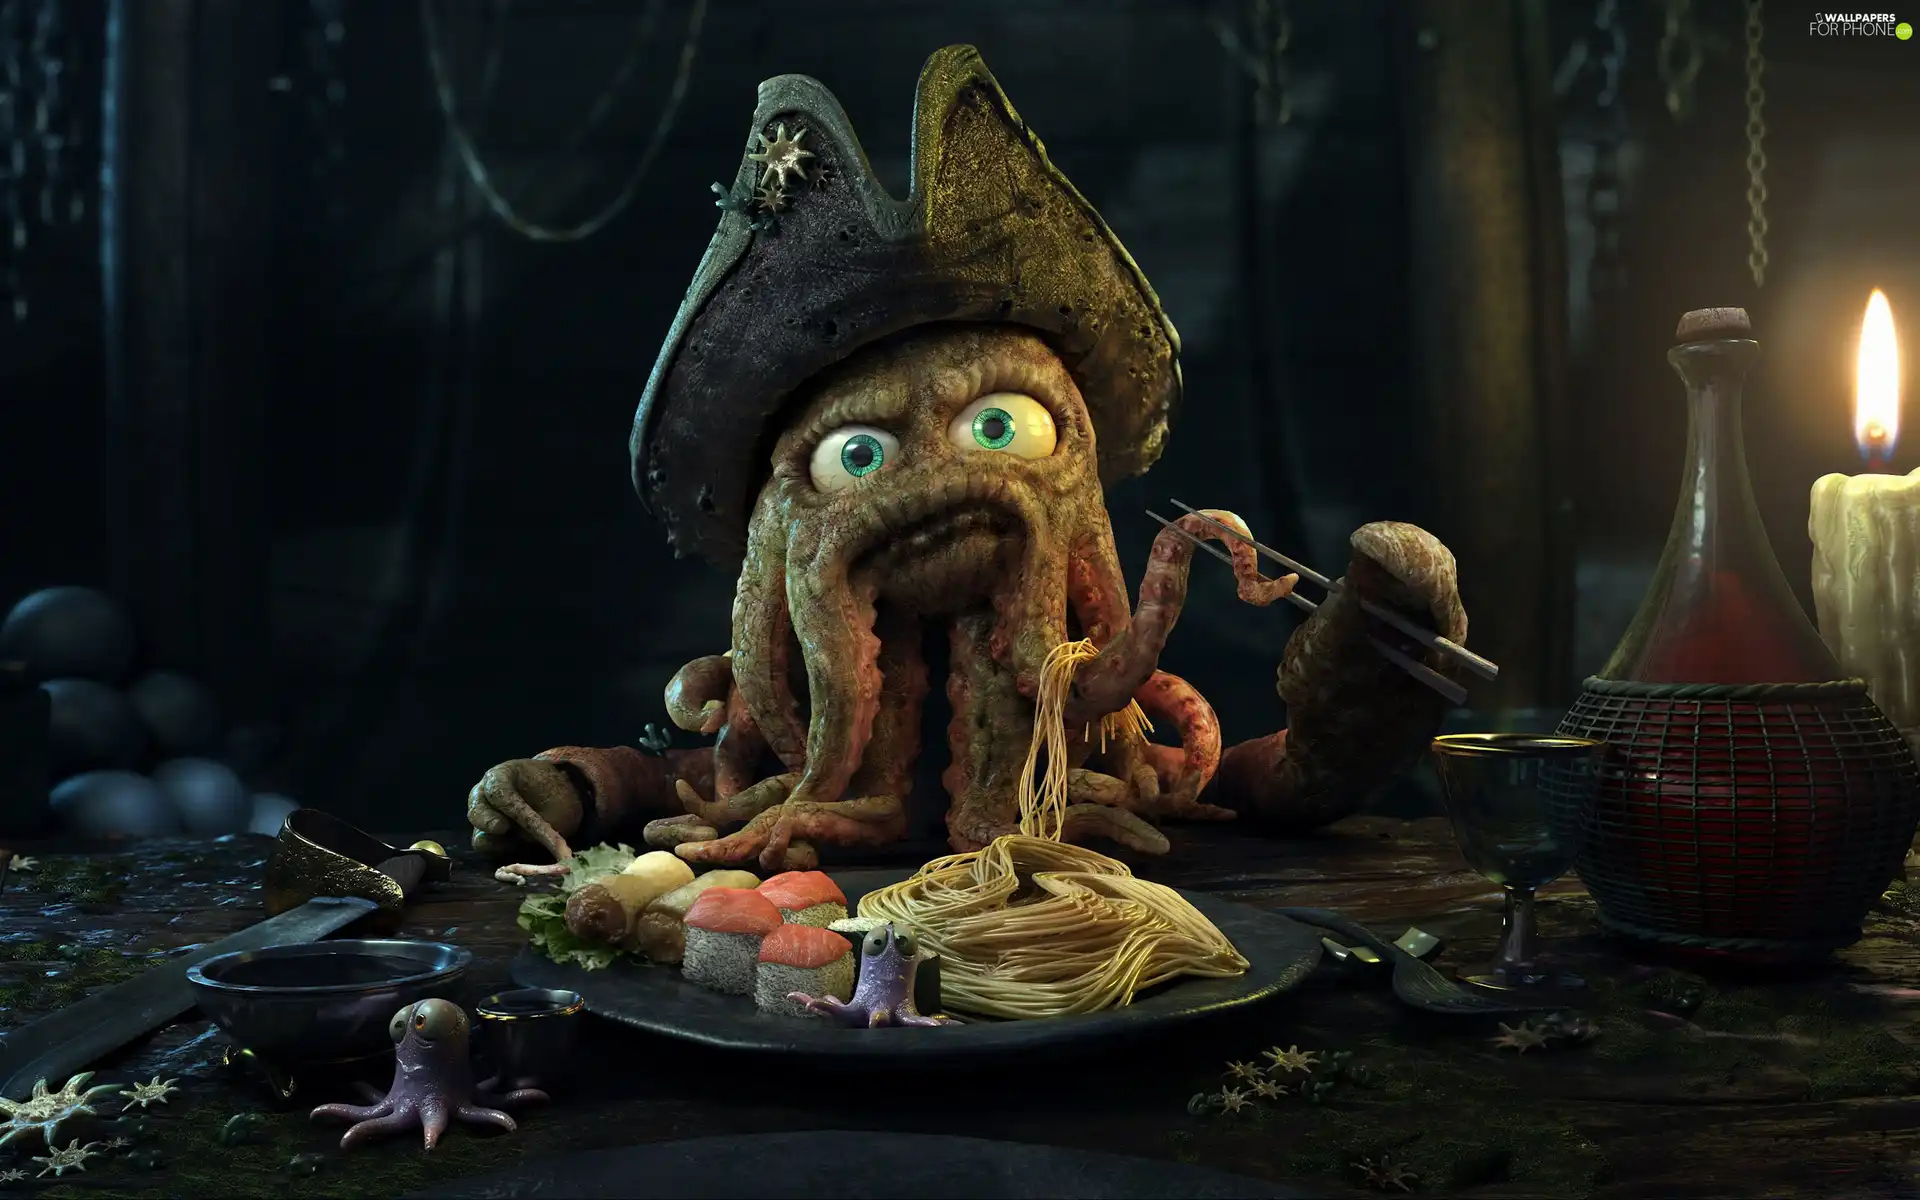 Davy, jones, tentacles, food, Pirate